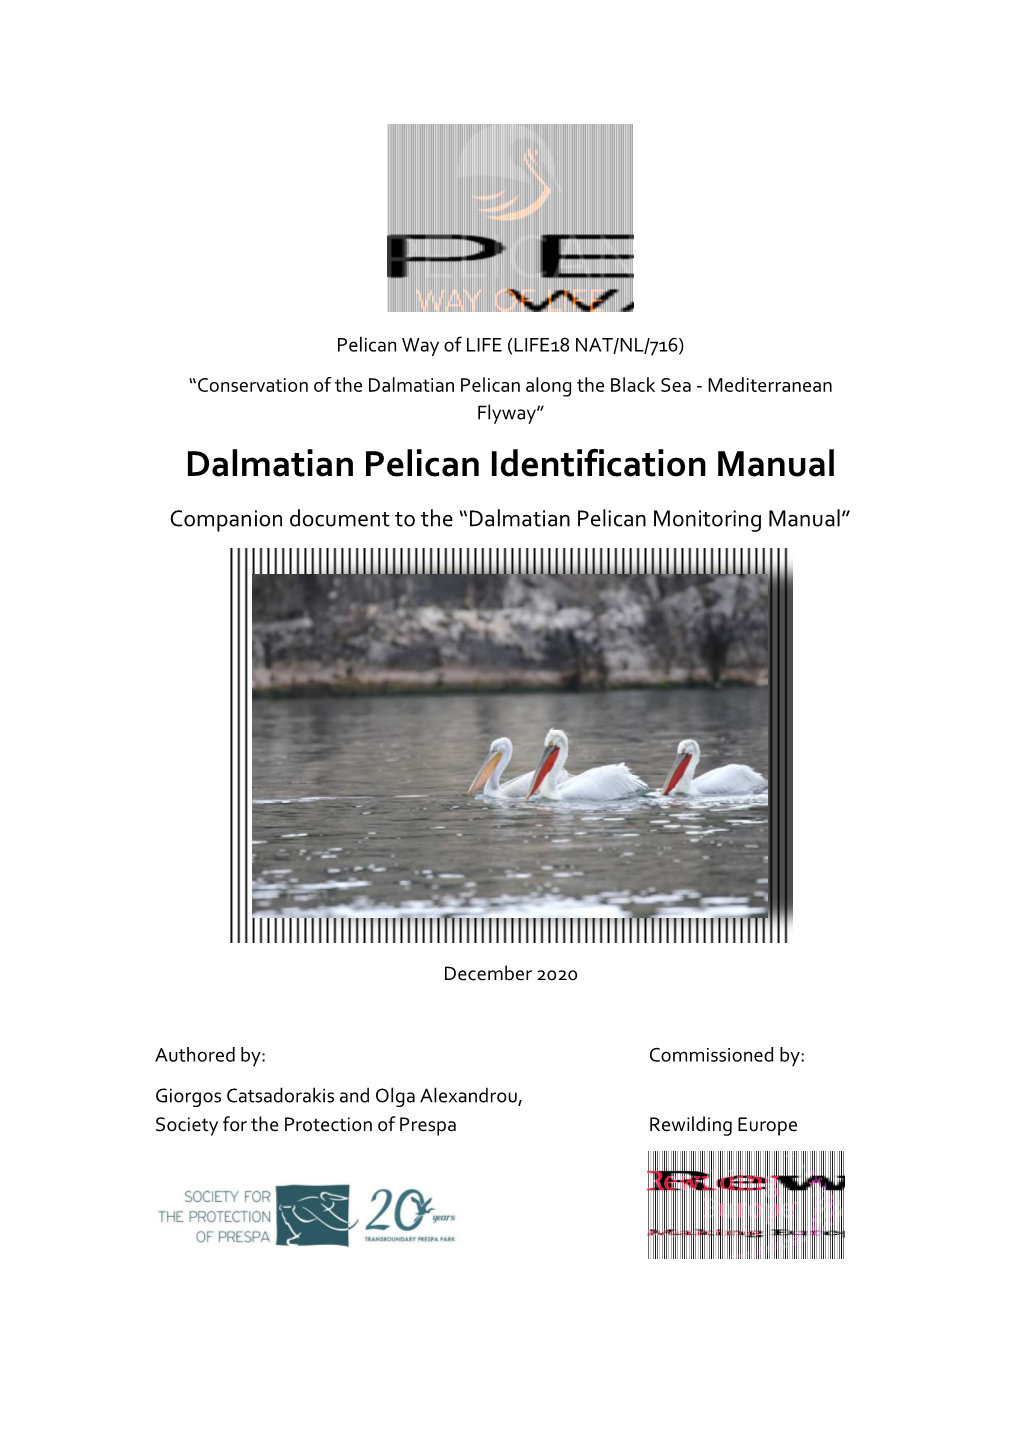 Dalmatian Pelican Identification Manual Companion Document to the “Dalmatian Pelican Monitoring Manual”